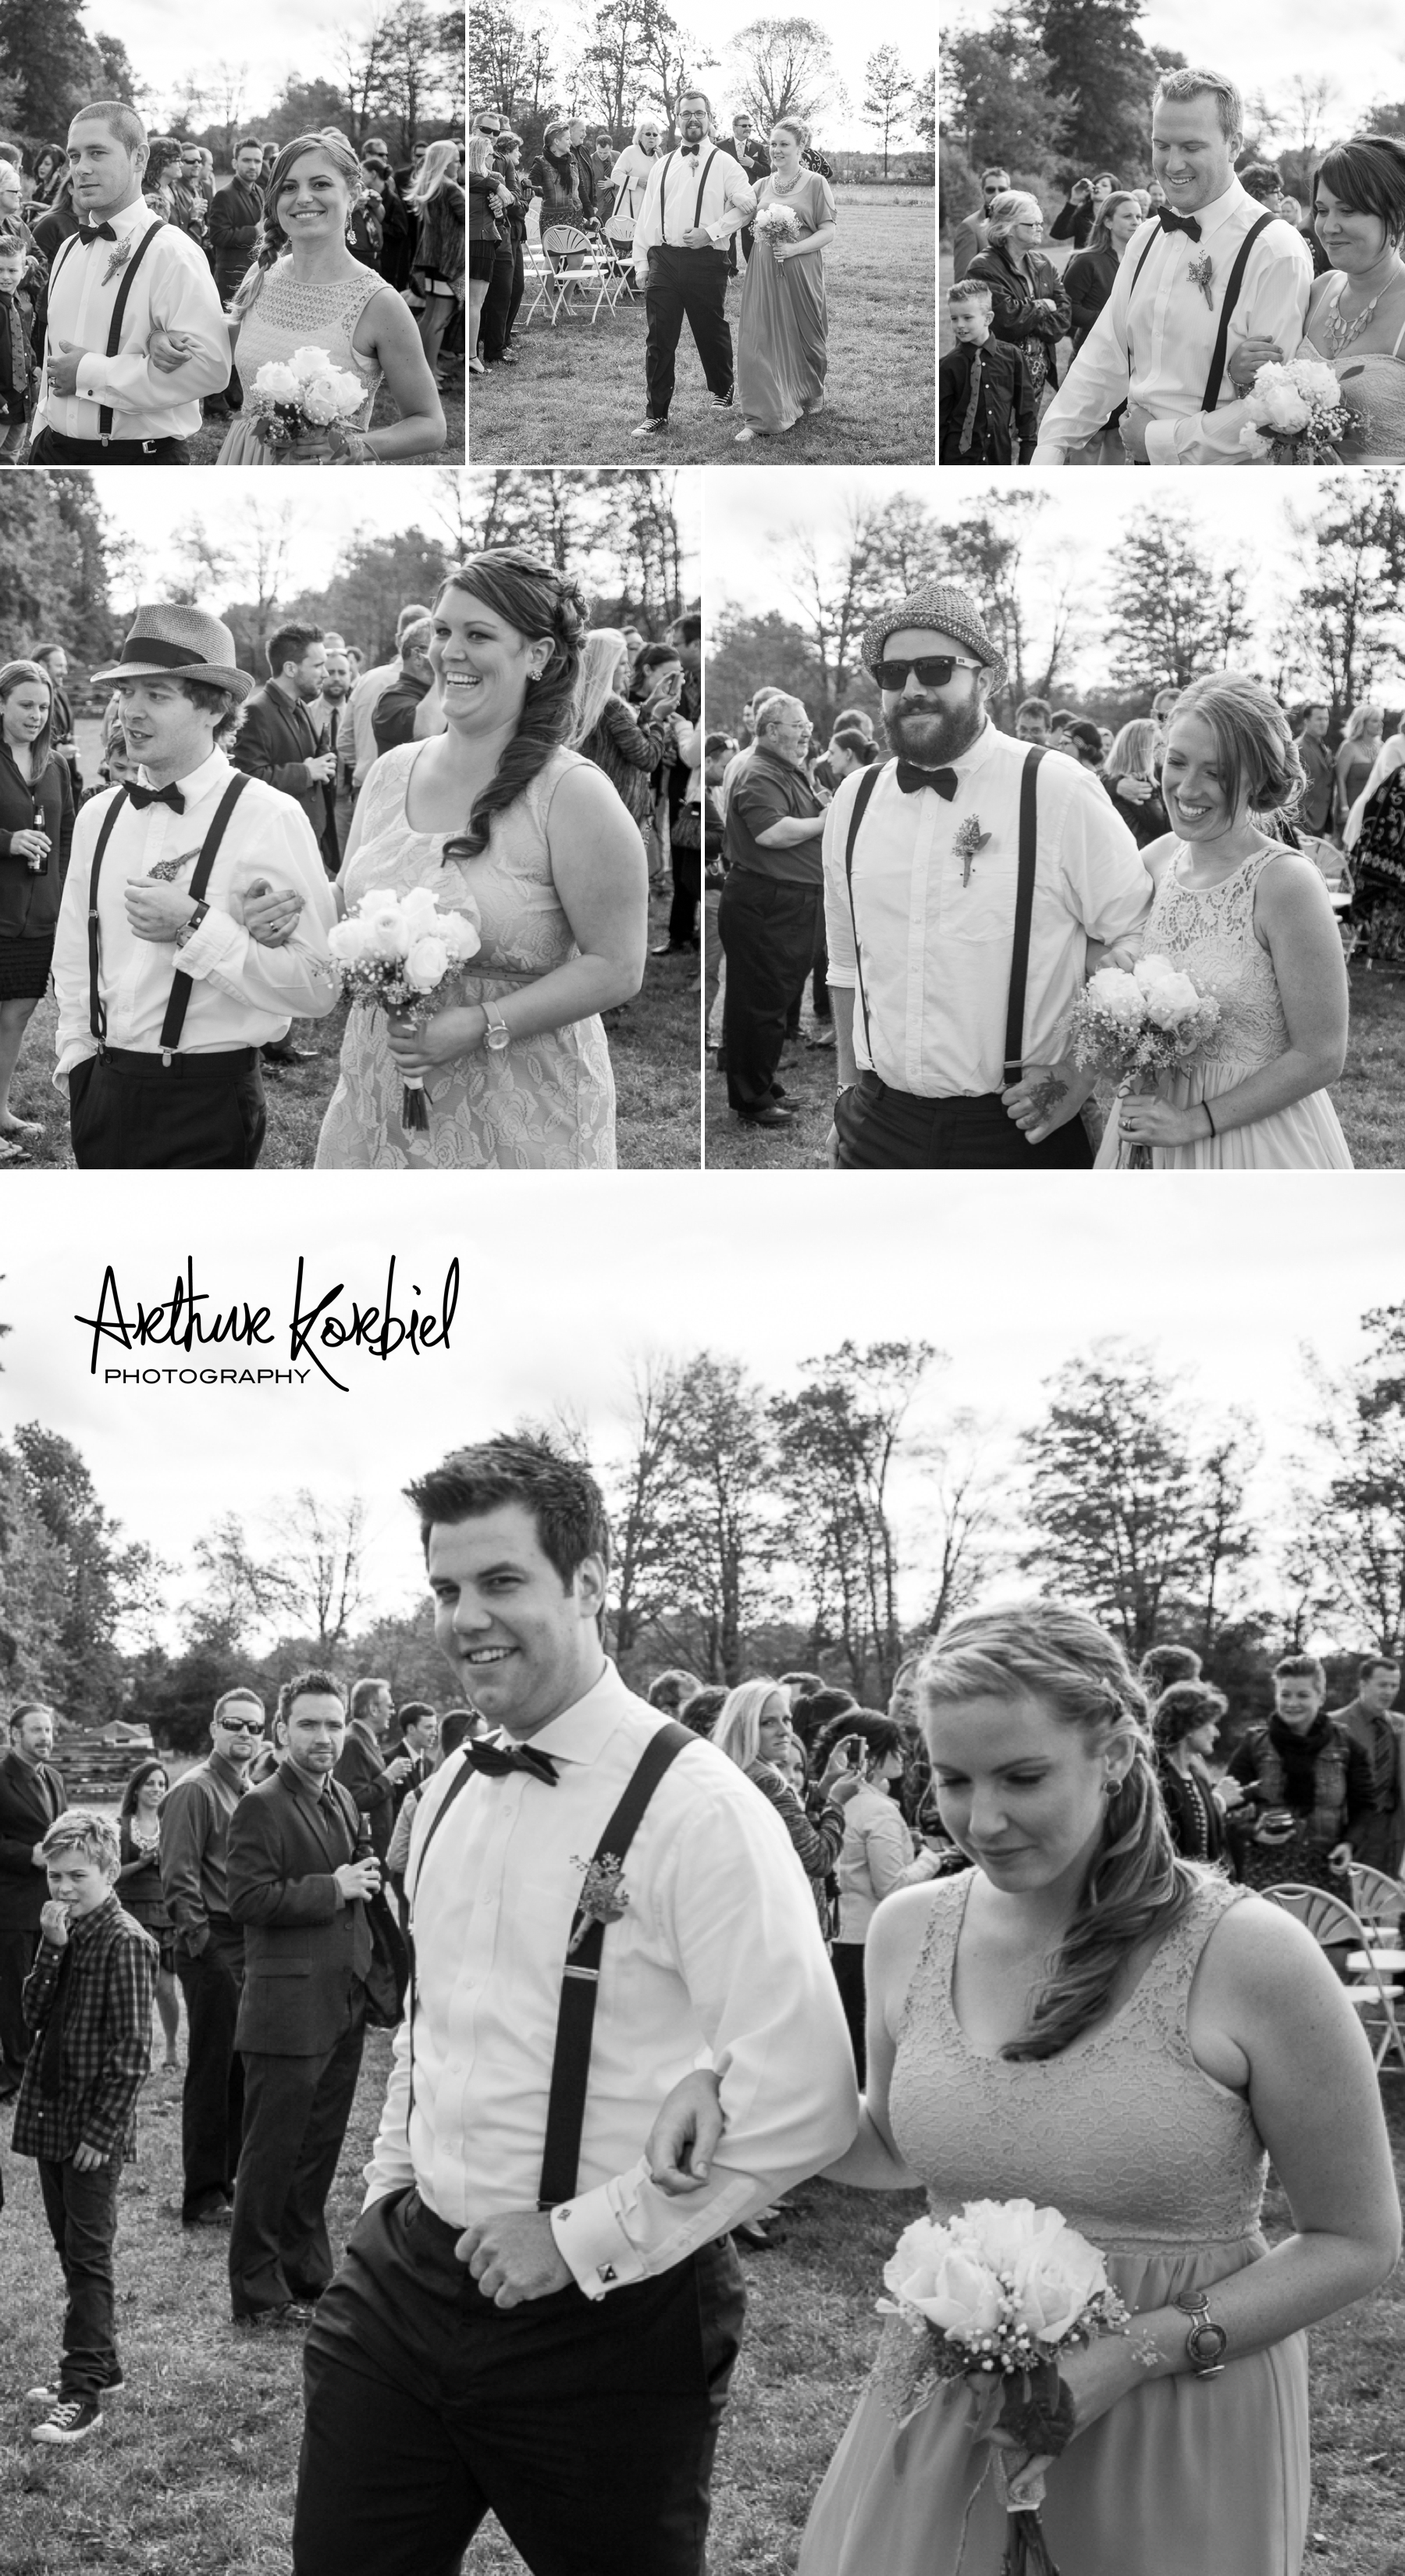 Arthur Korbiel Photography - London Engagement Photographer - Sauble Beach Barn Wedding - Samantha & Dan_007.jpg